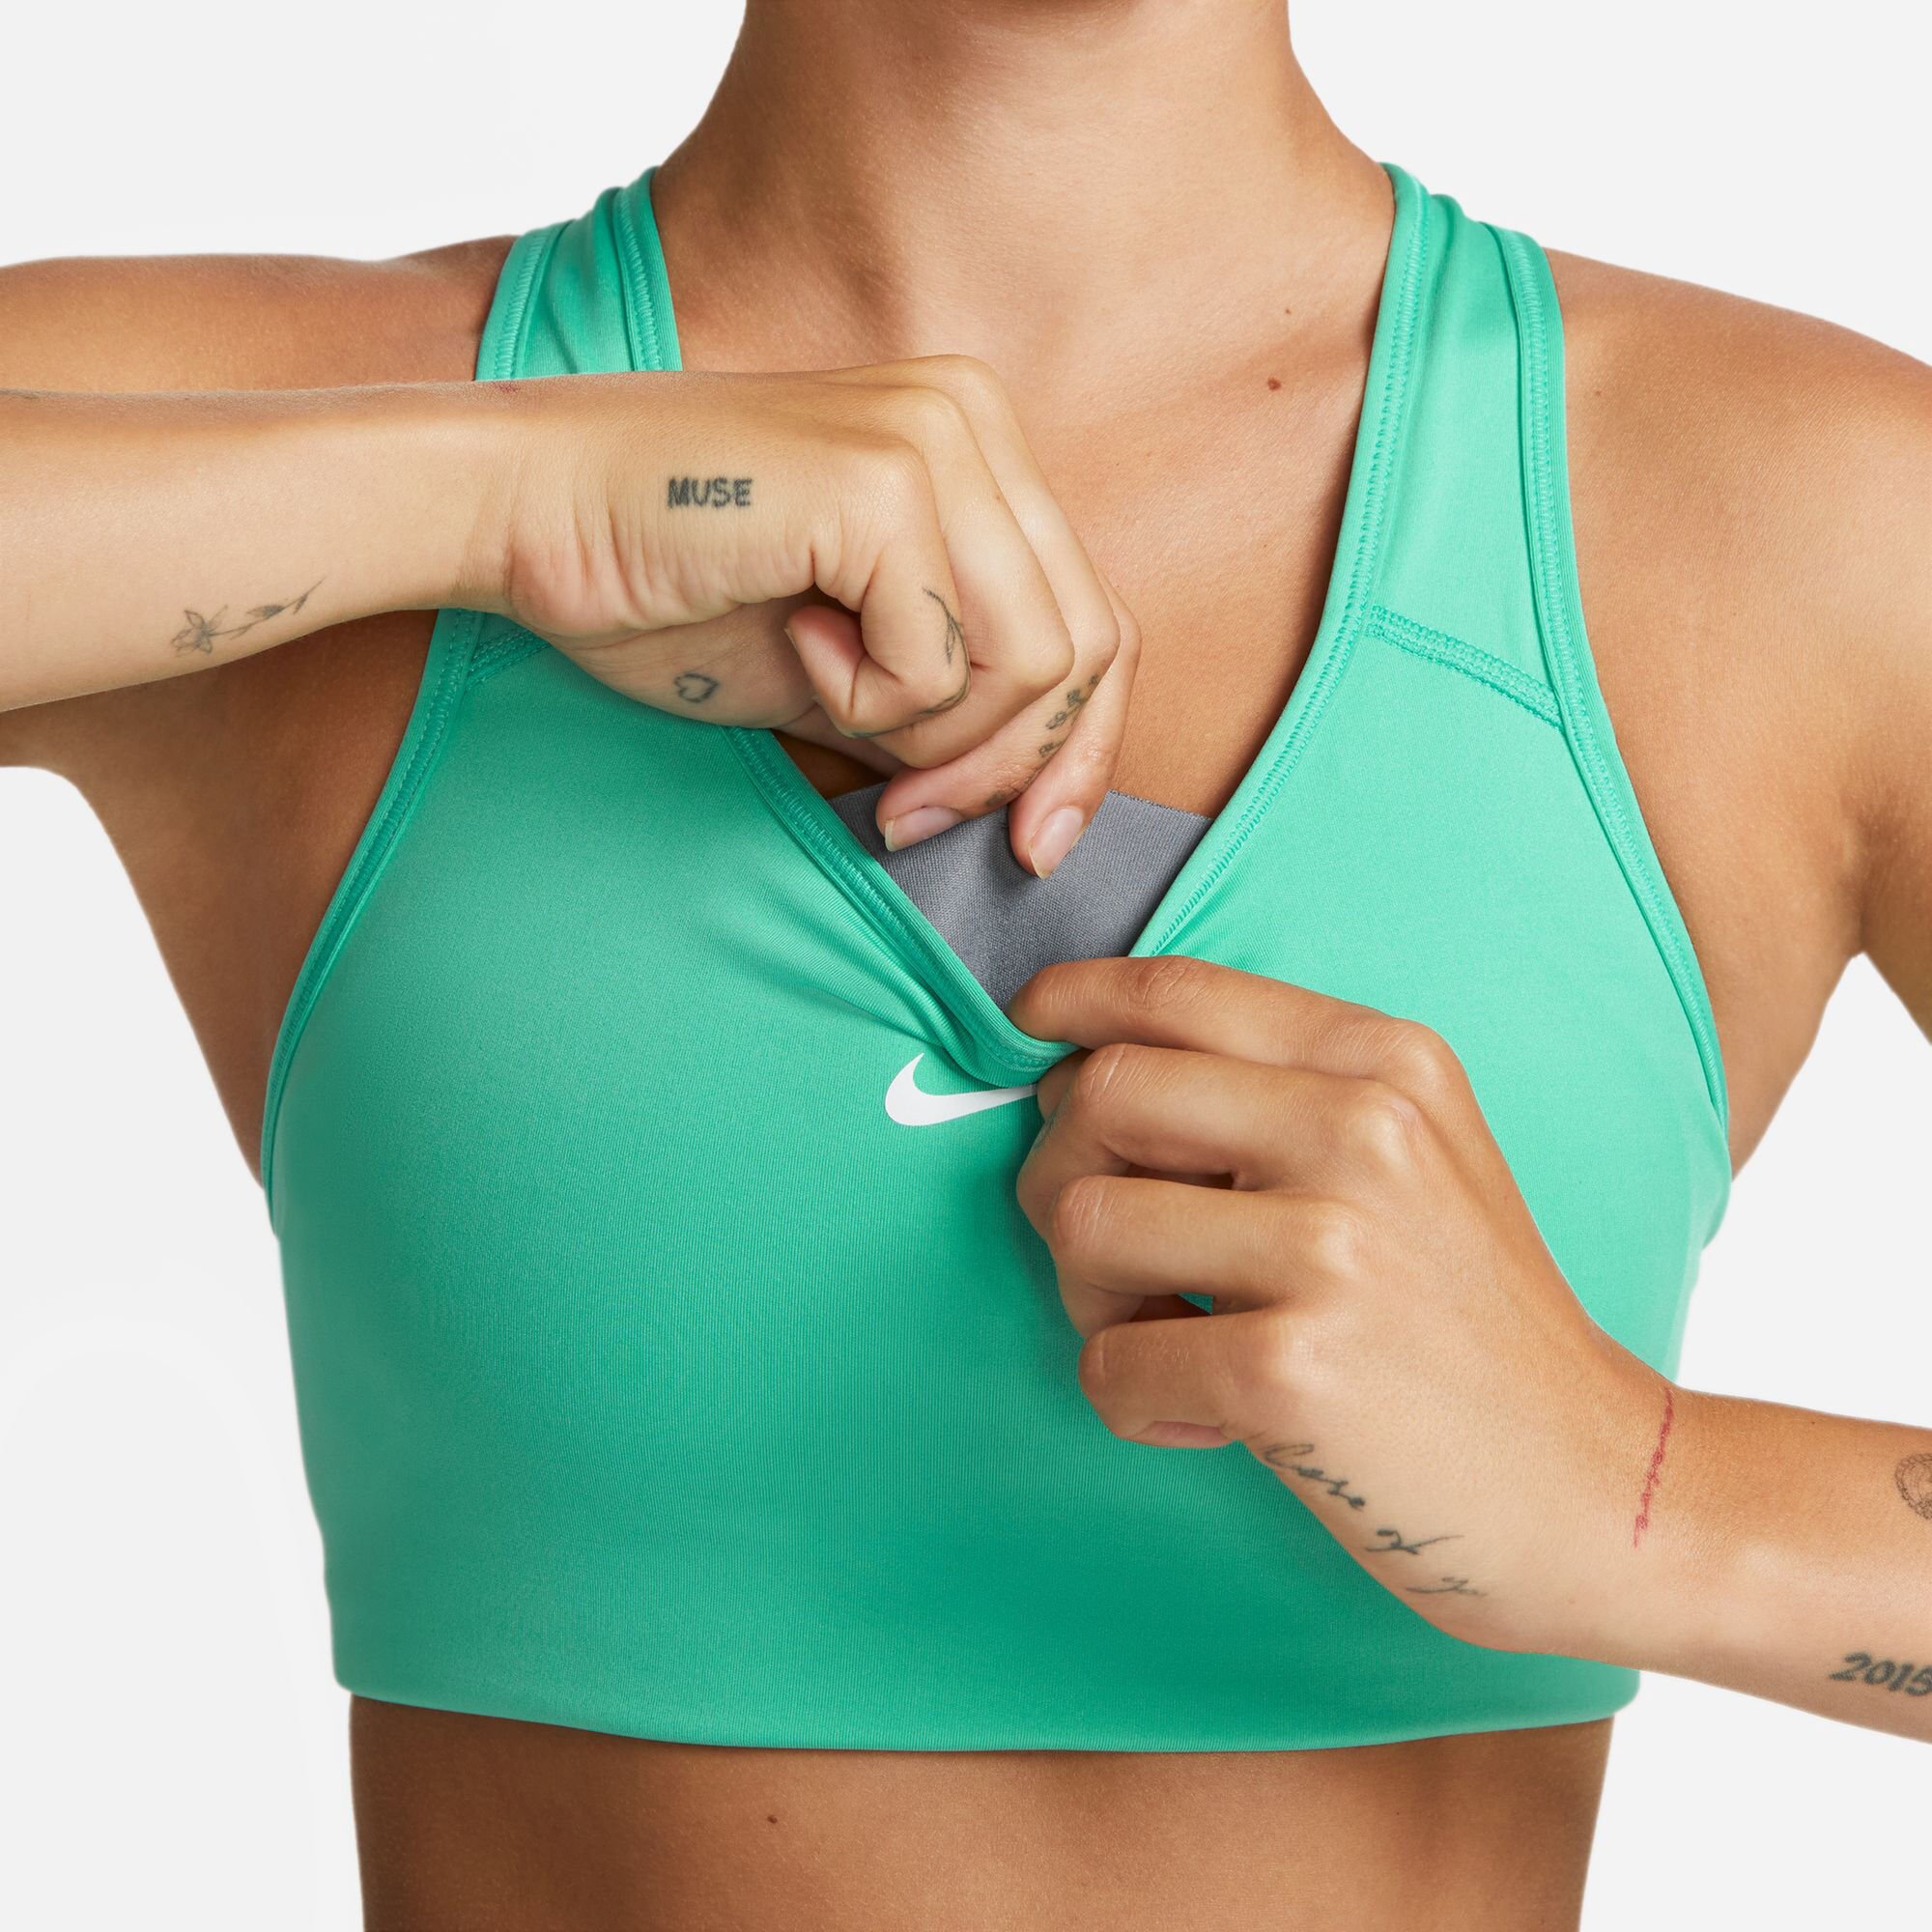 Buy Nike Swoosh Medium Support Sports Bras Women Mint, White online